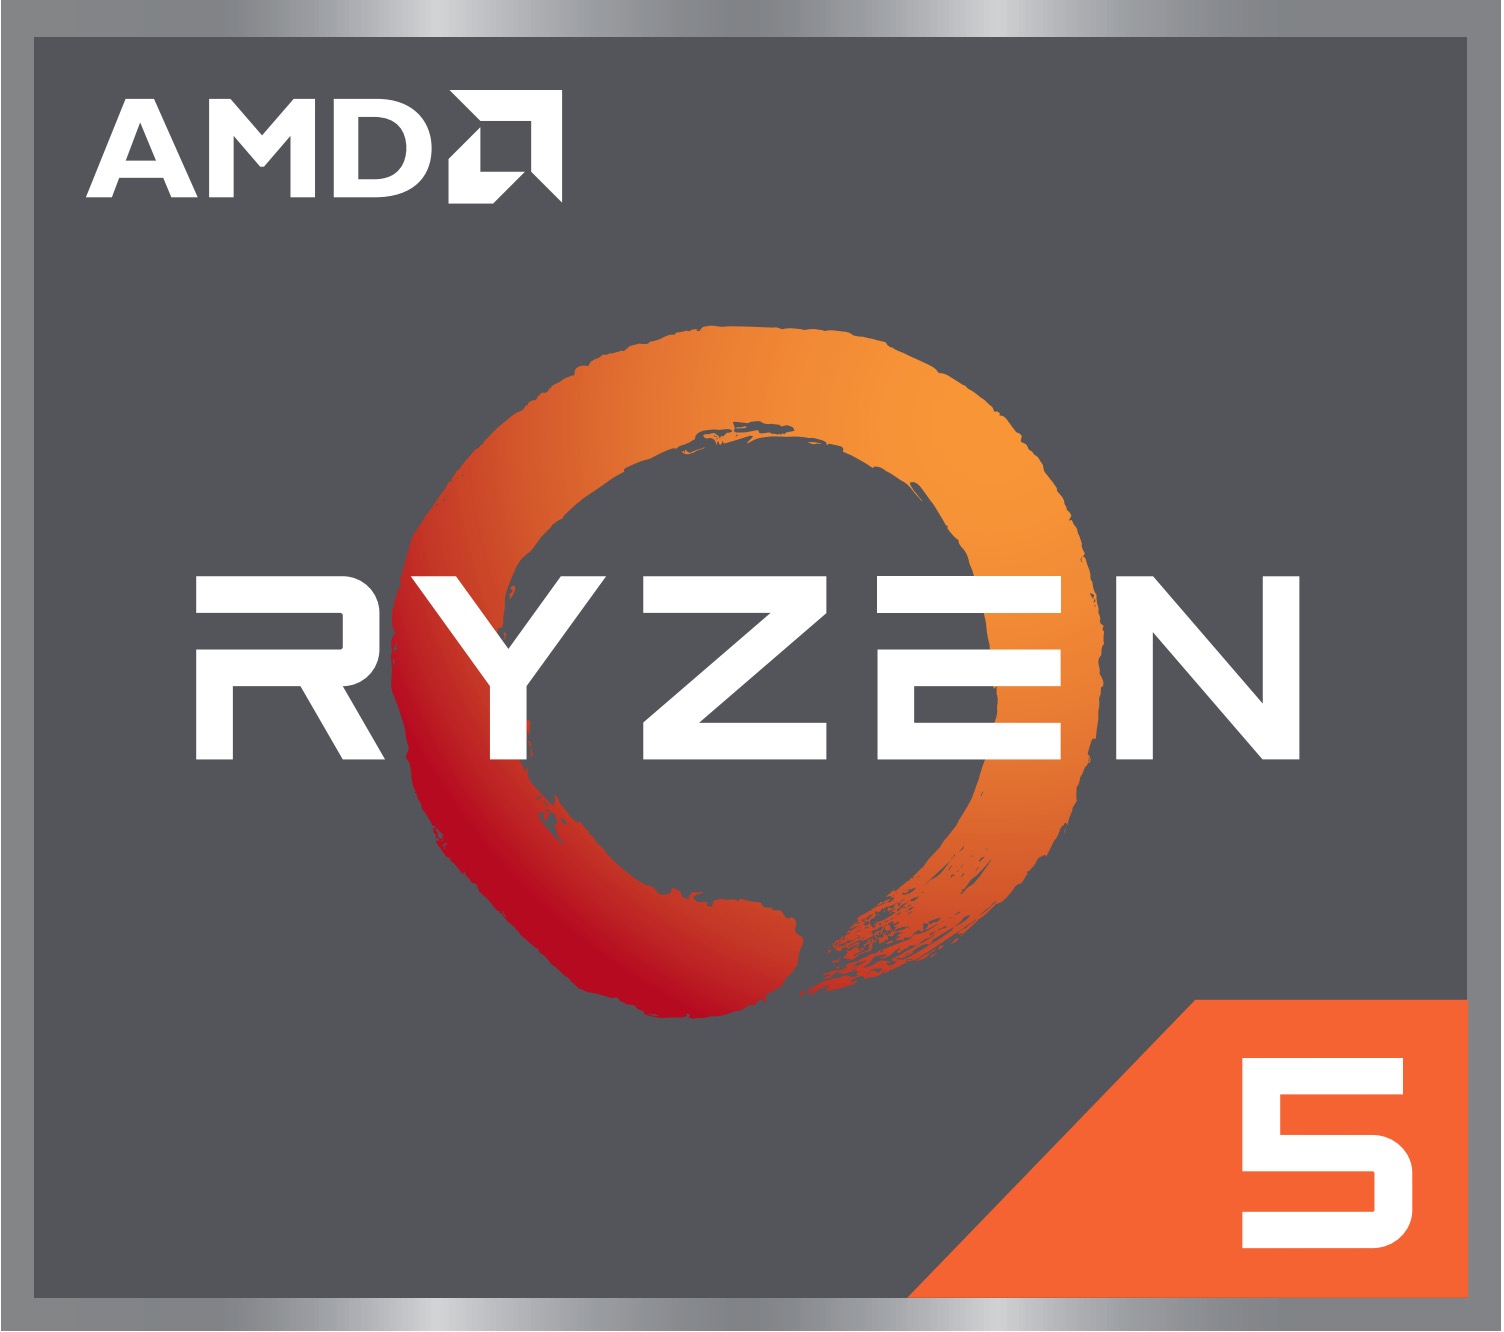 AMD Ryzen 5 2400G APU - Benchmarks and Specs - NotebookCheck.net Tech